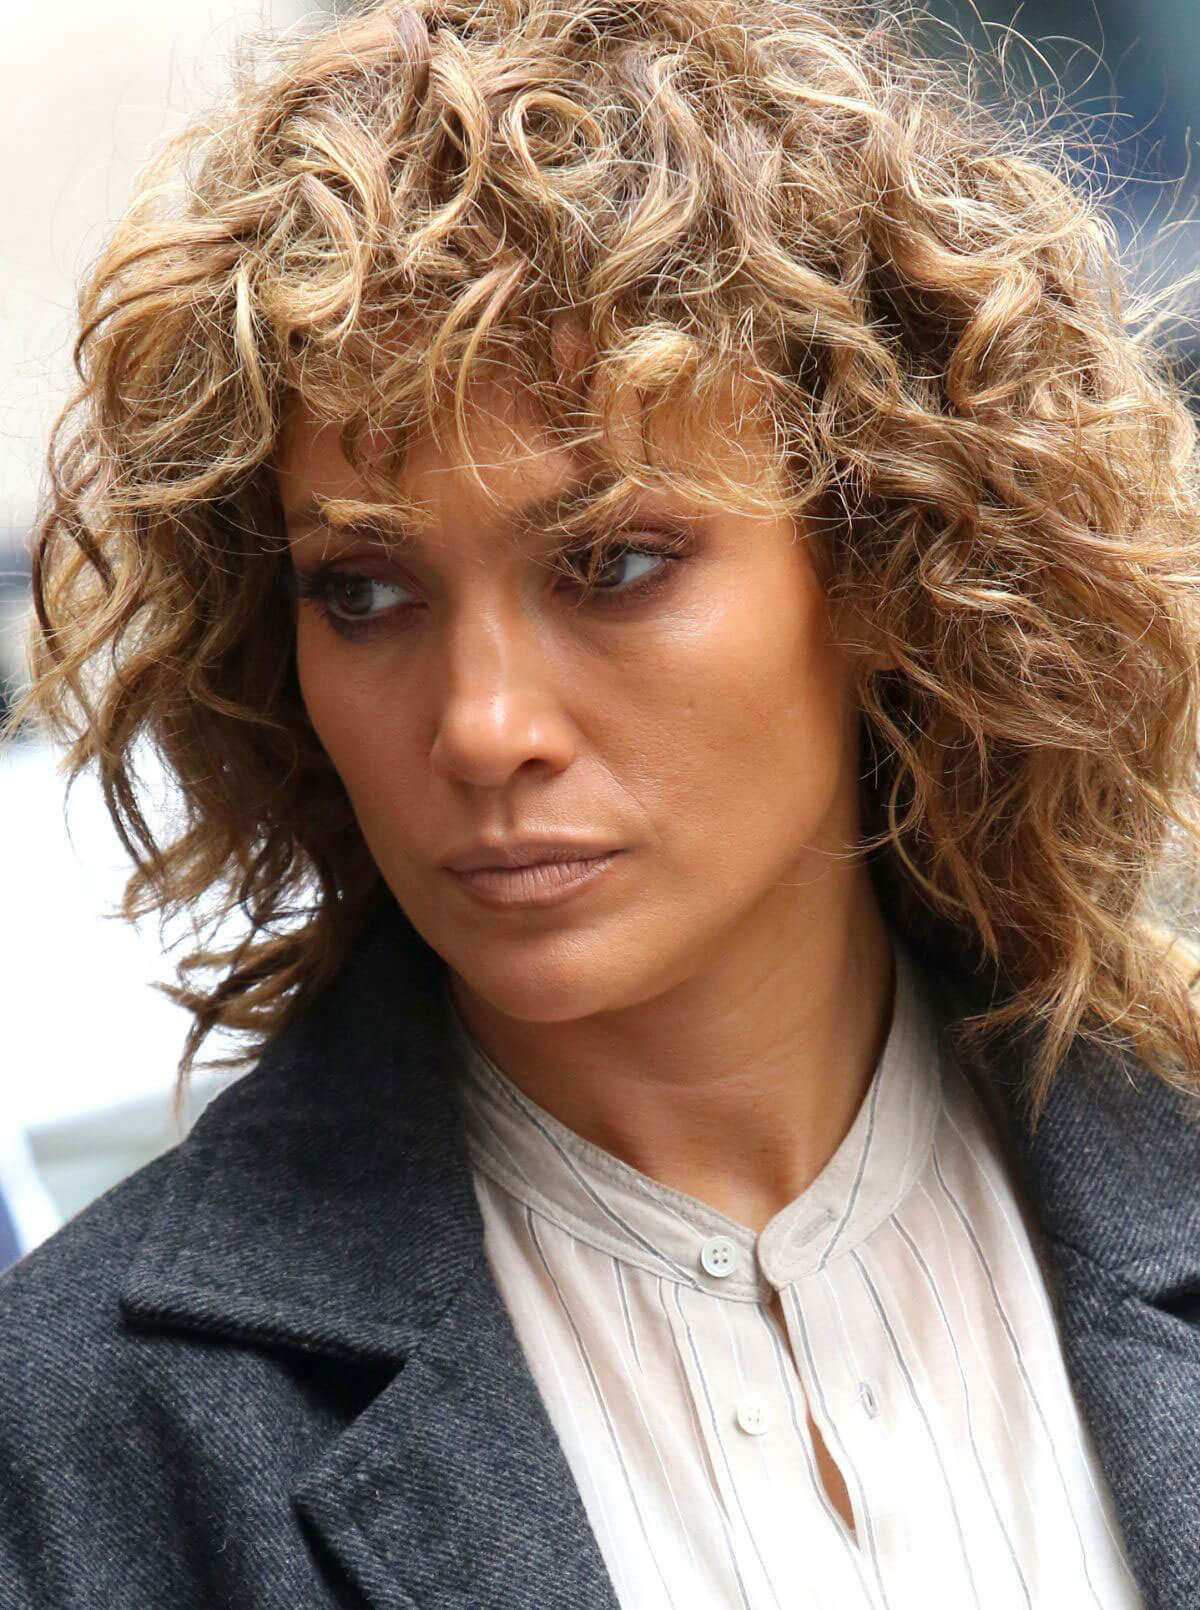 Jennifer Lopez Stills on the Set of Shades of Blue in New York